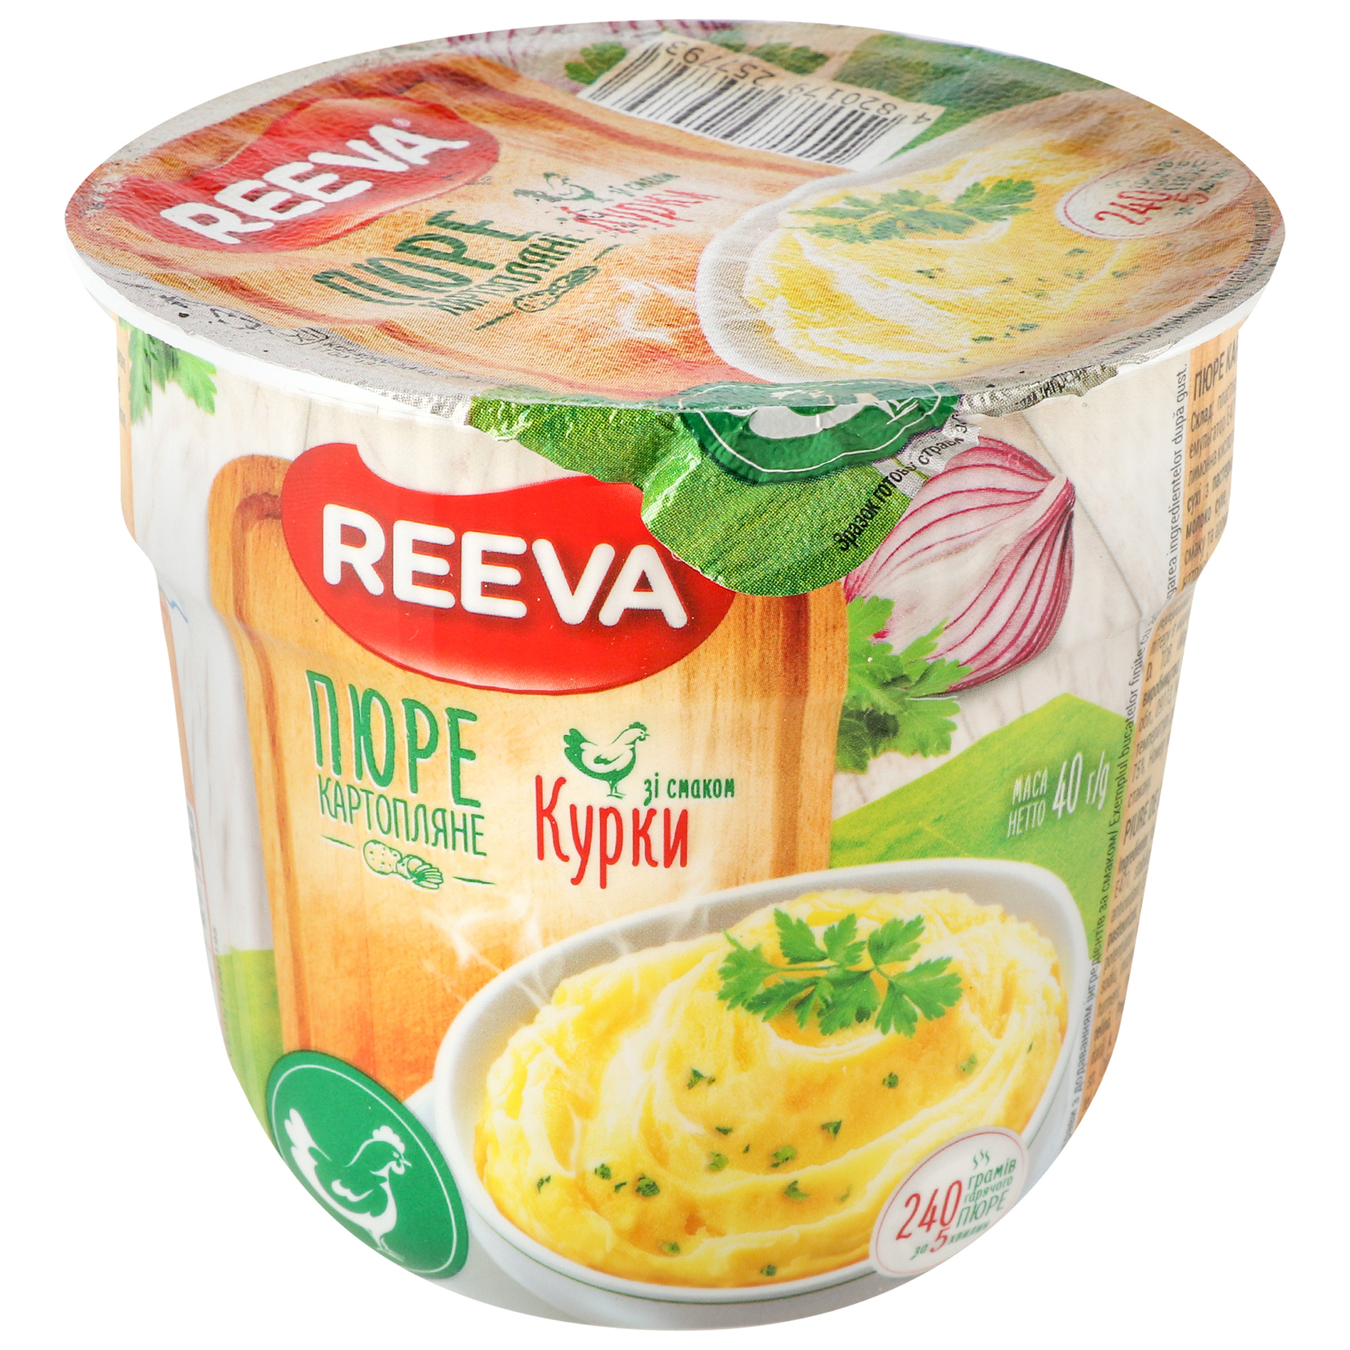 Reeva potato puree with chicken flavor 40g 3